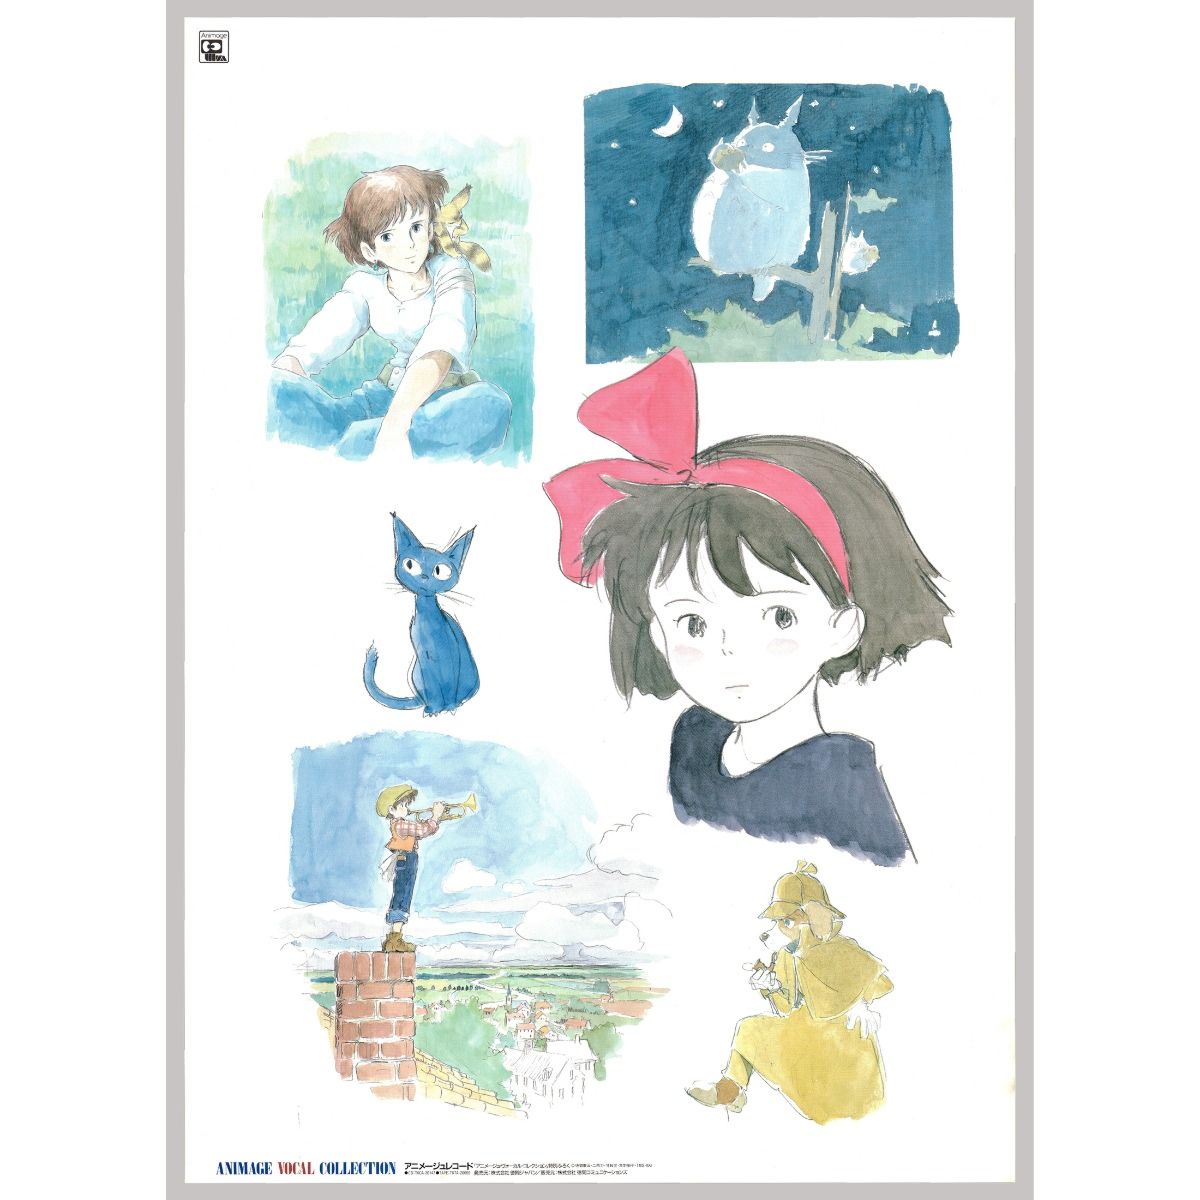 Buy Original Studio Ghibli Animage Anime Poster Online